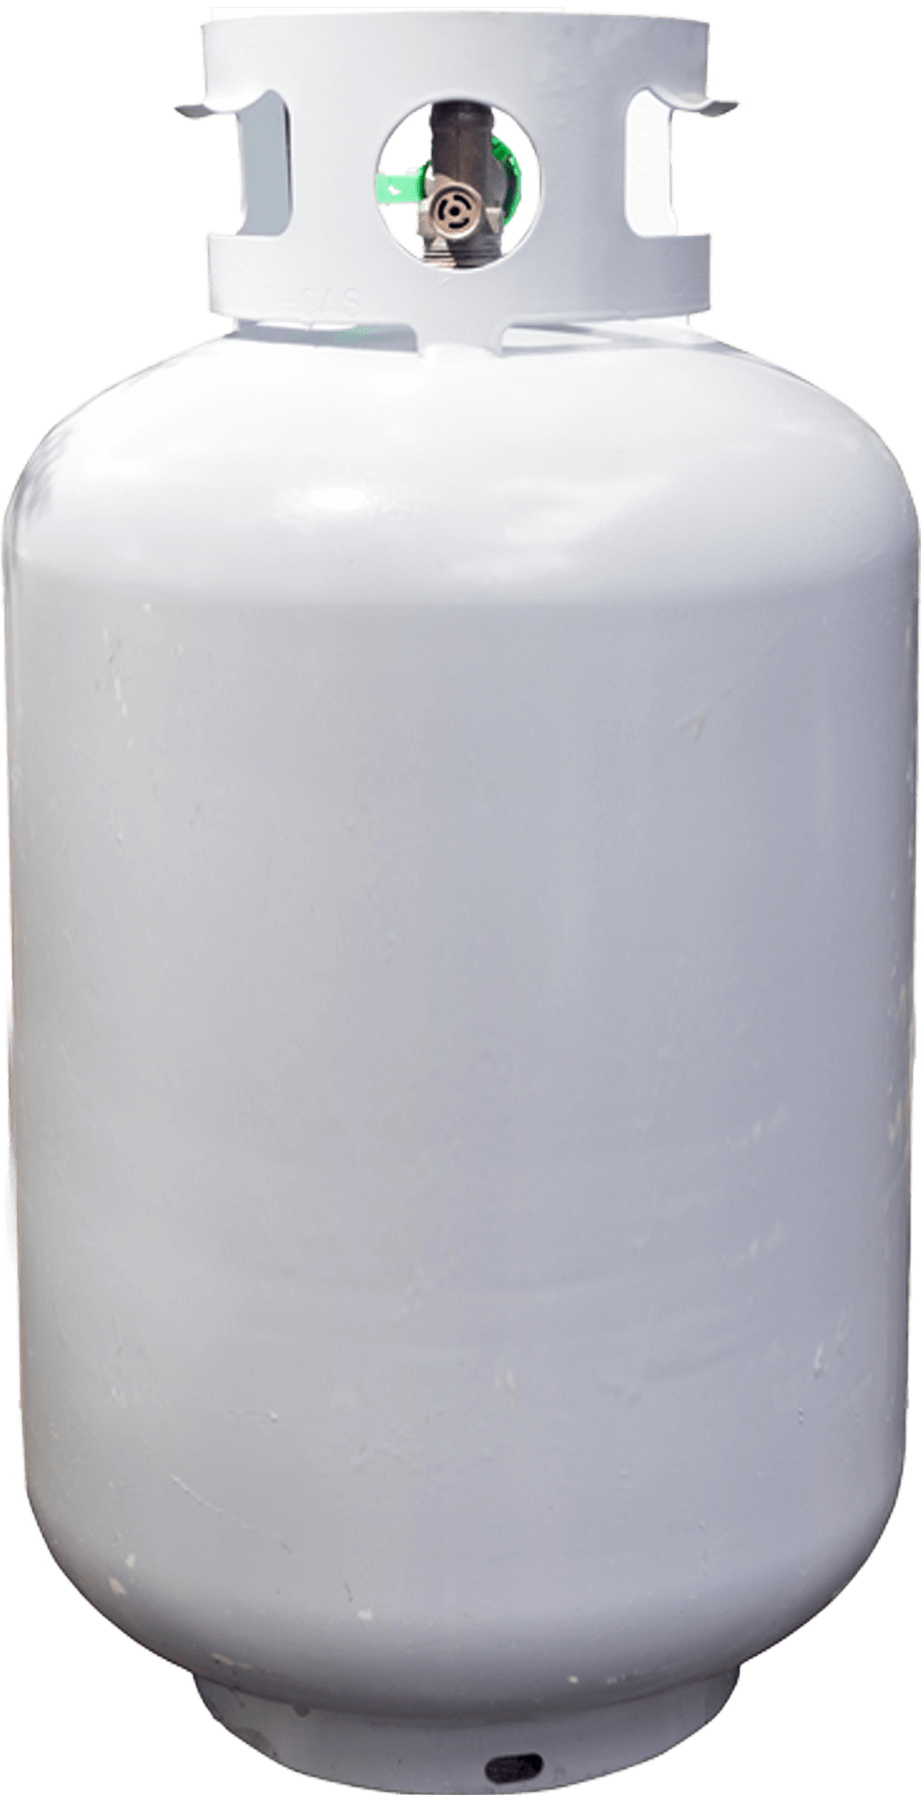 30 pound propane cylinder - 7.5 gallon